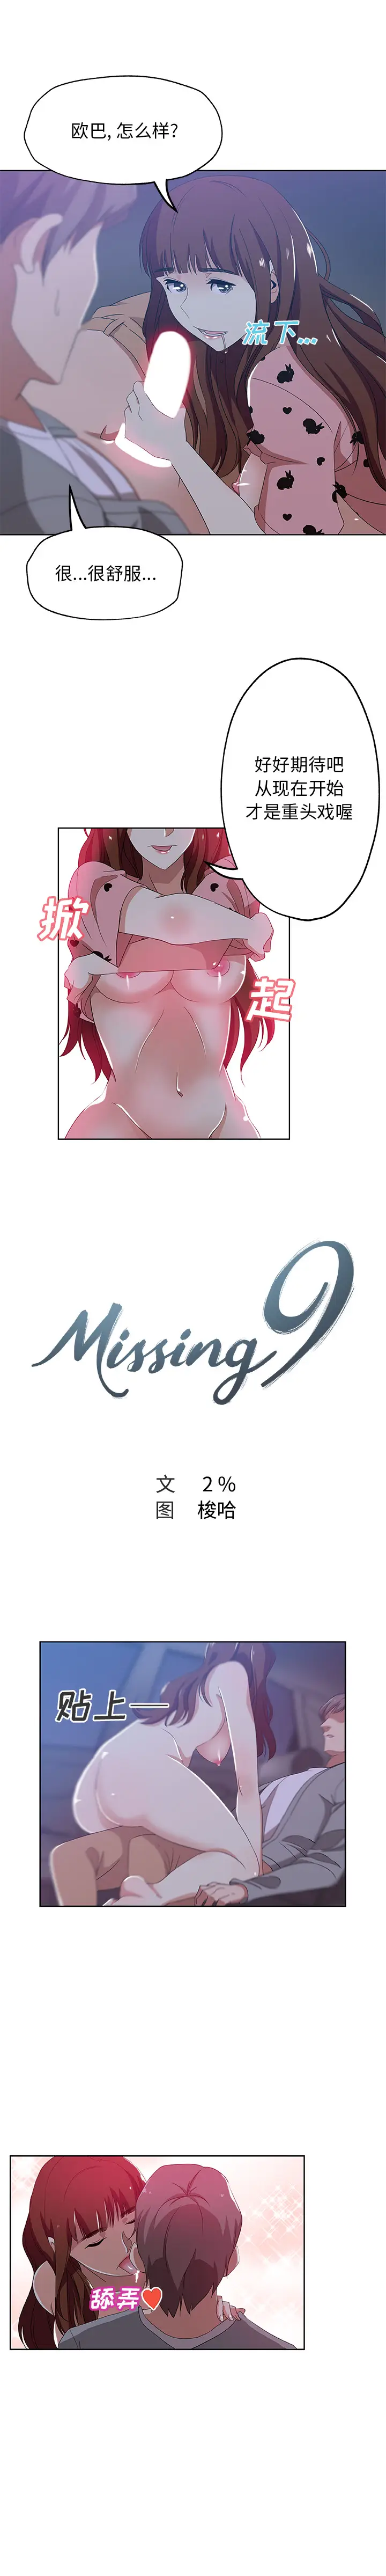 Missing9[顶通]-第6话全彩韩漫标签